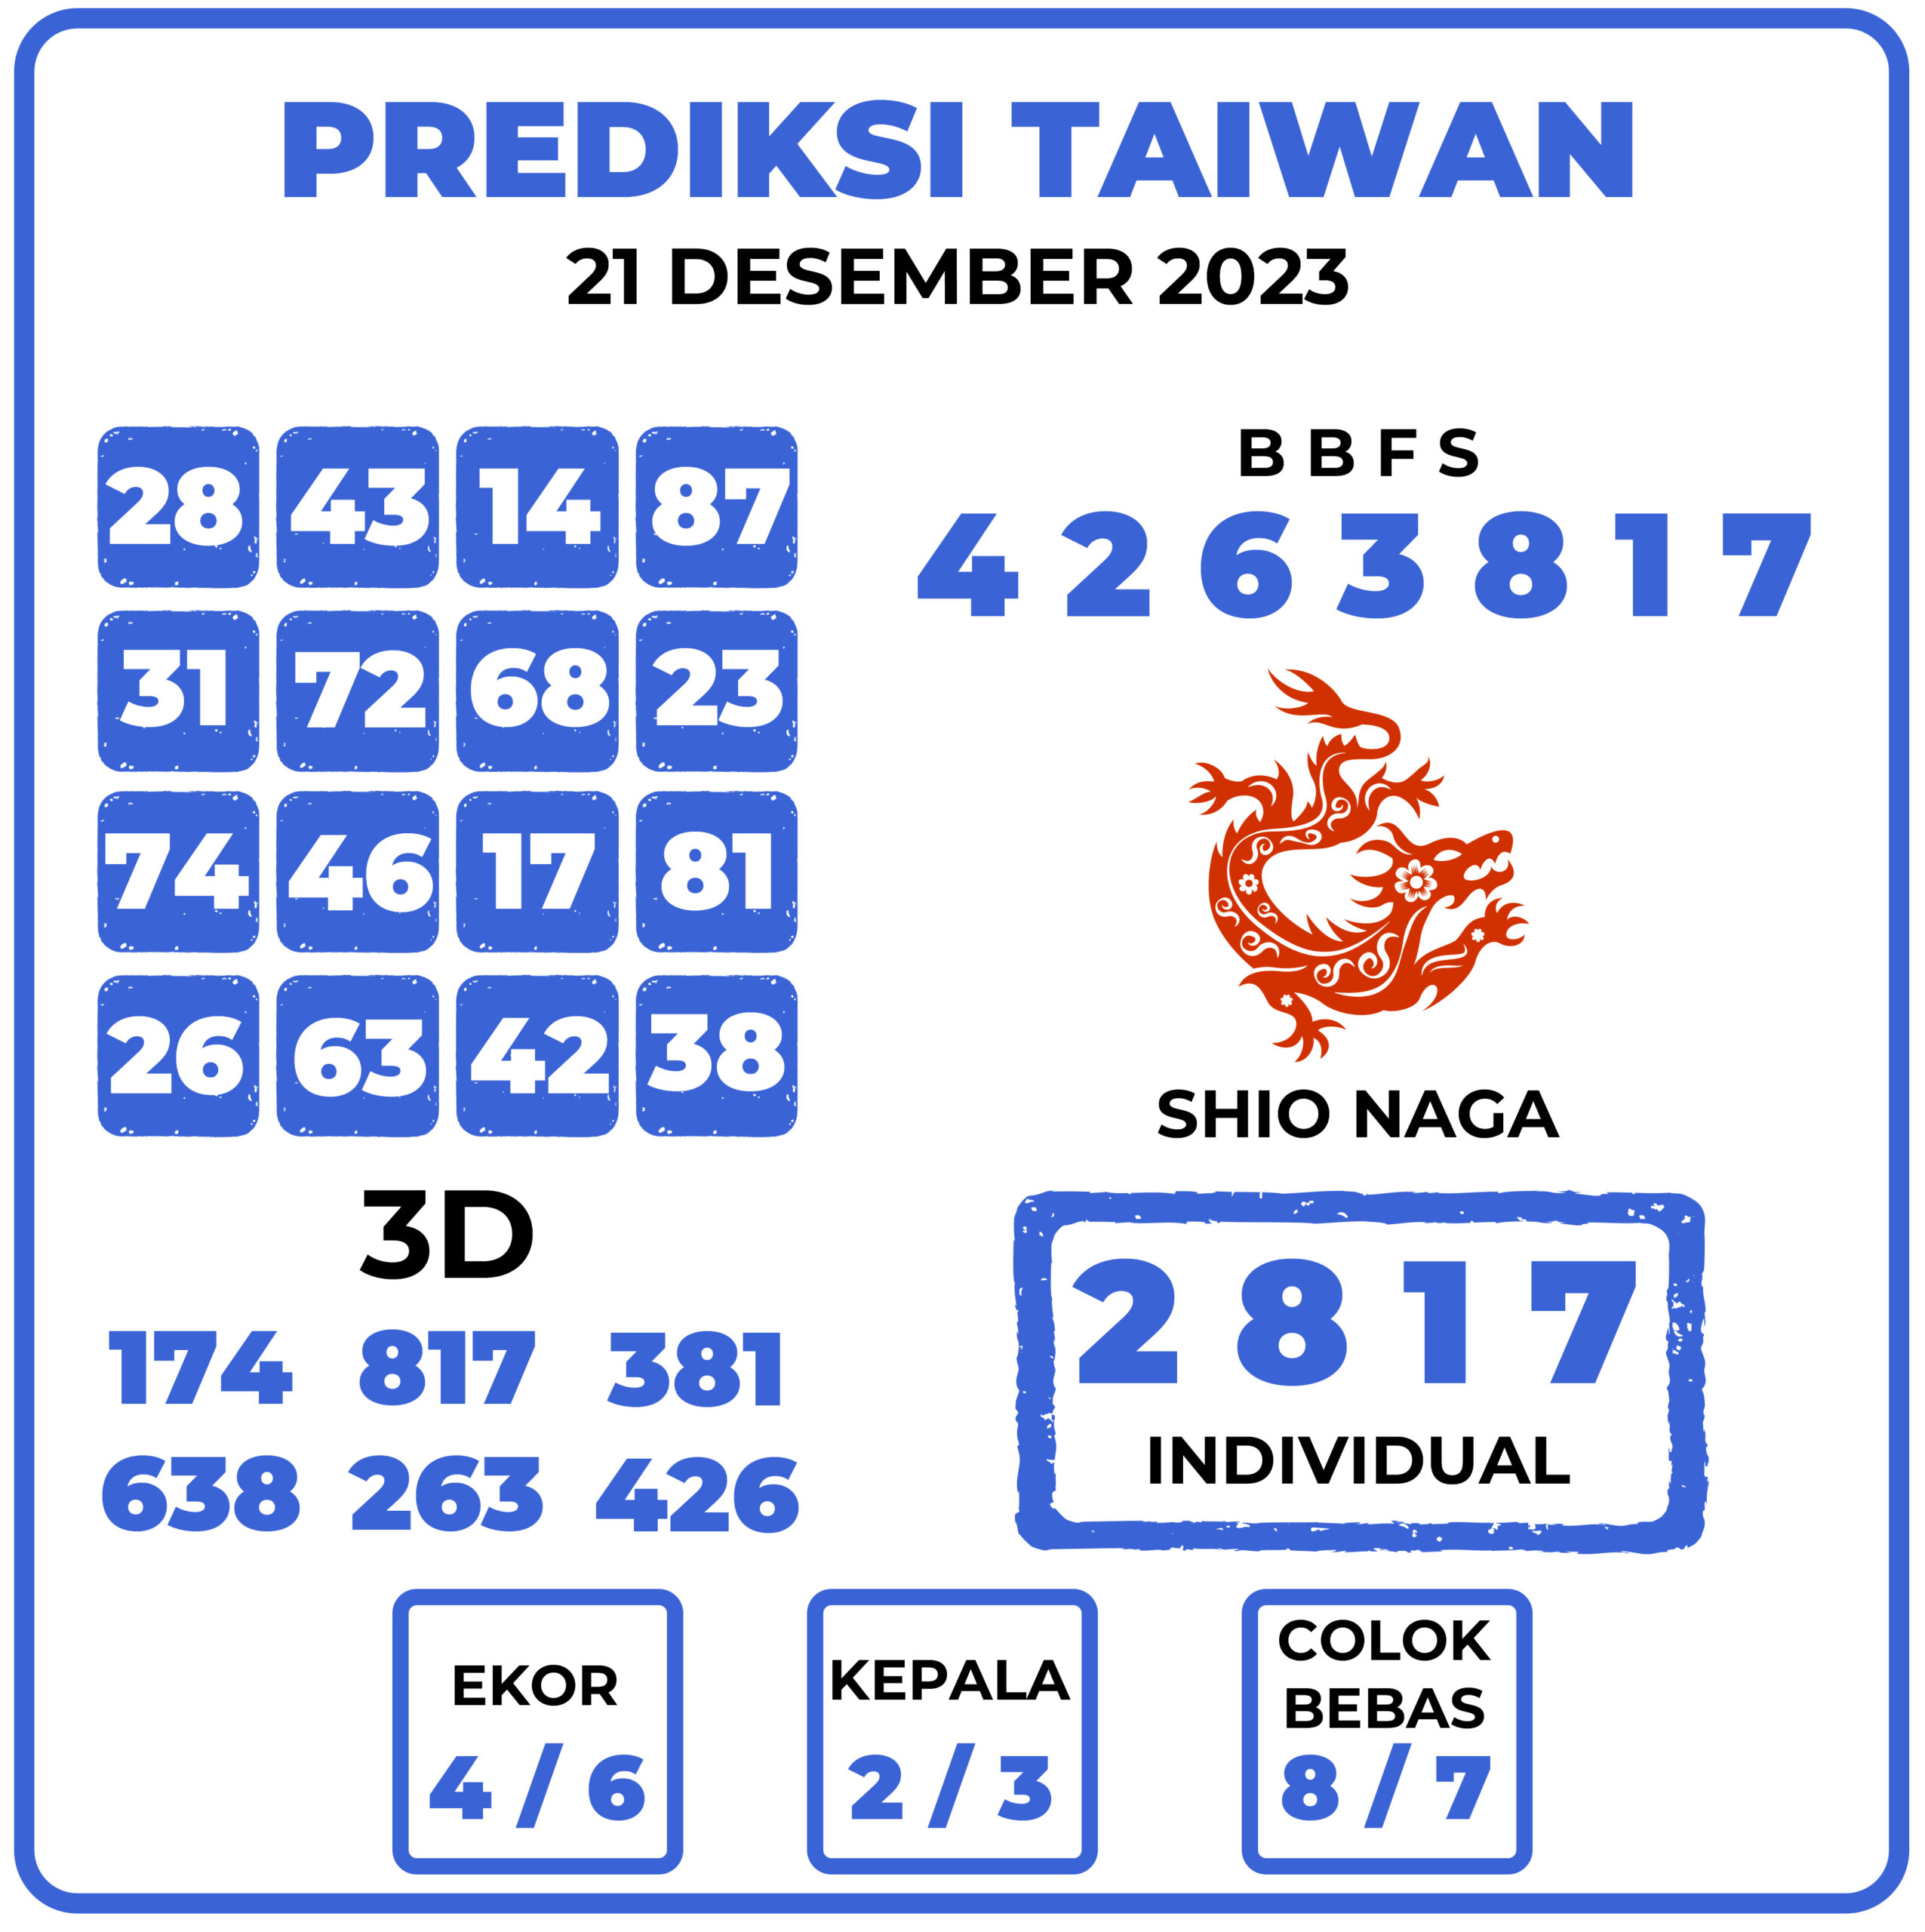 Prediksi Togel Taiwan 21 Desember 2023